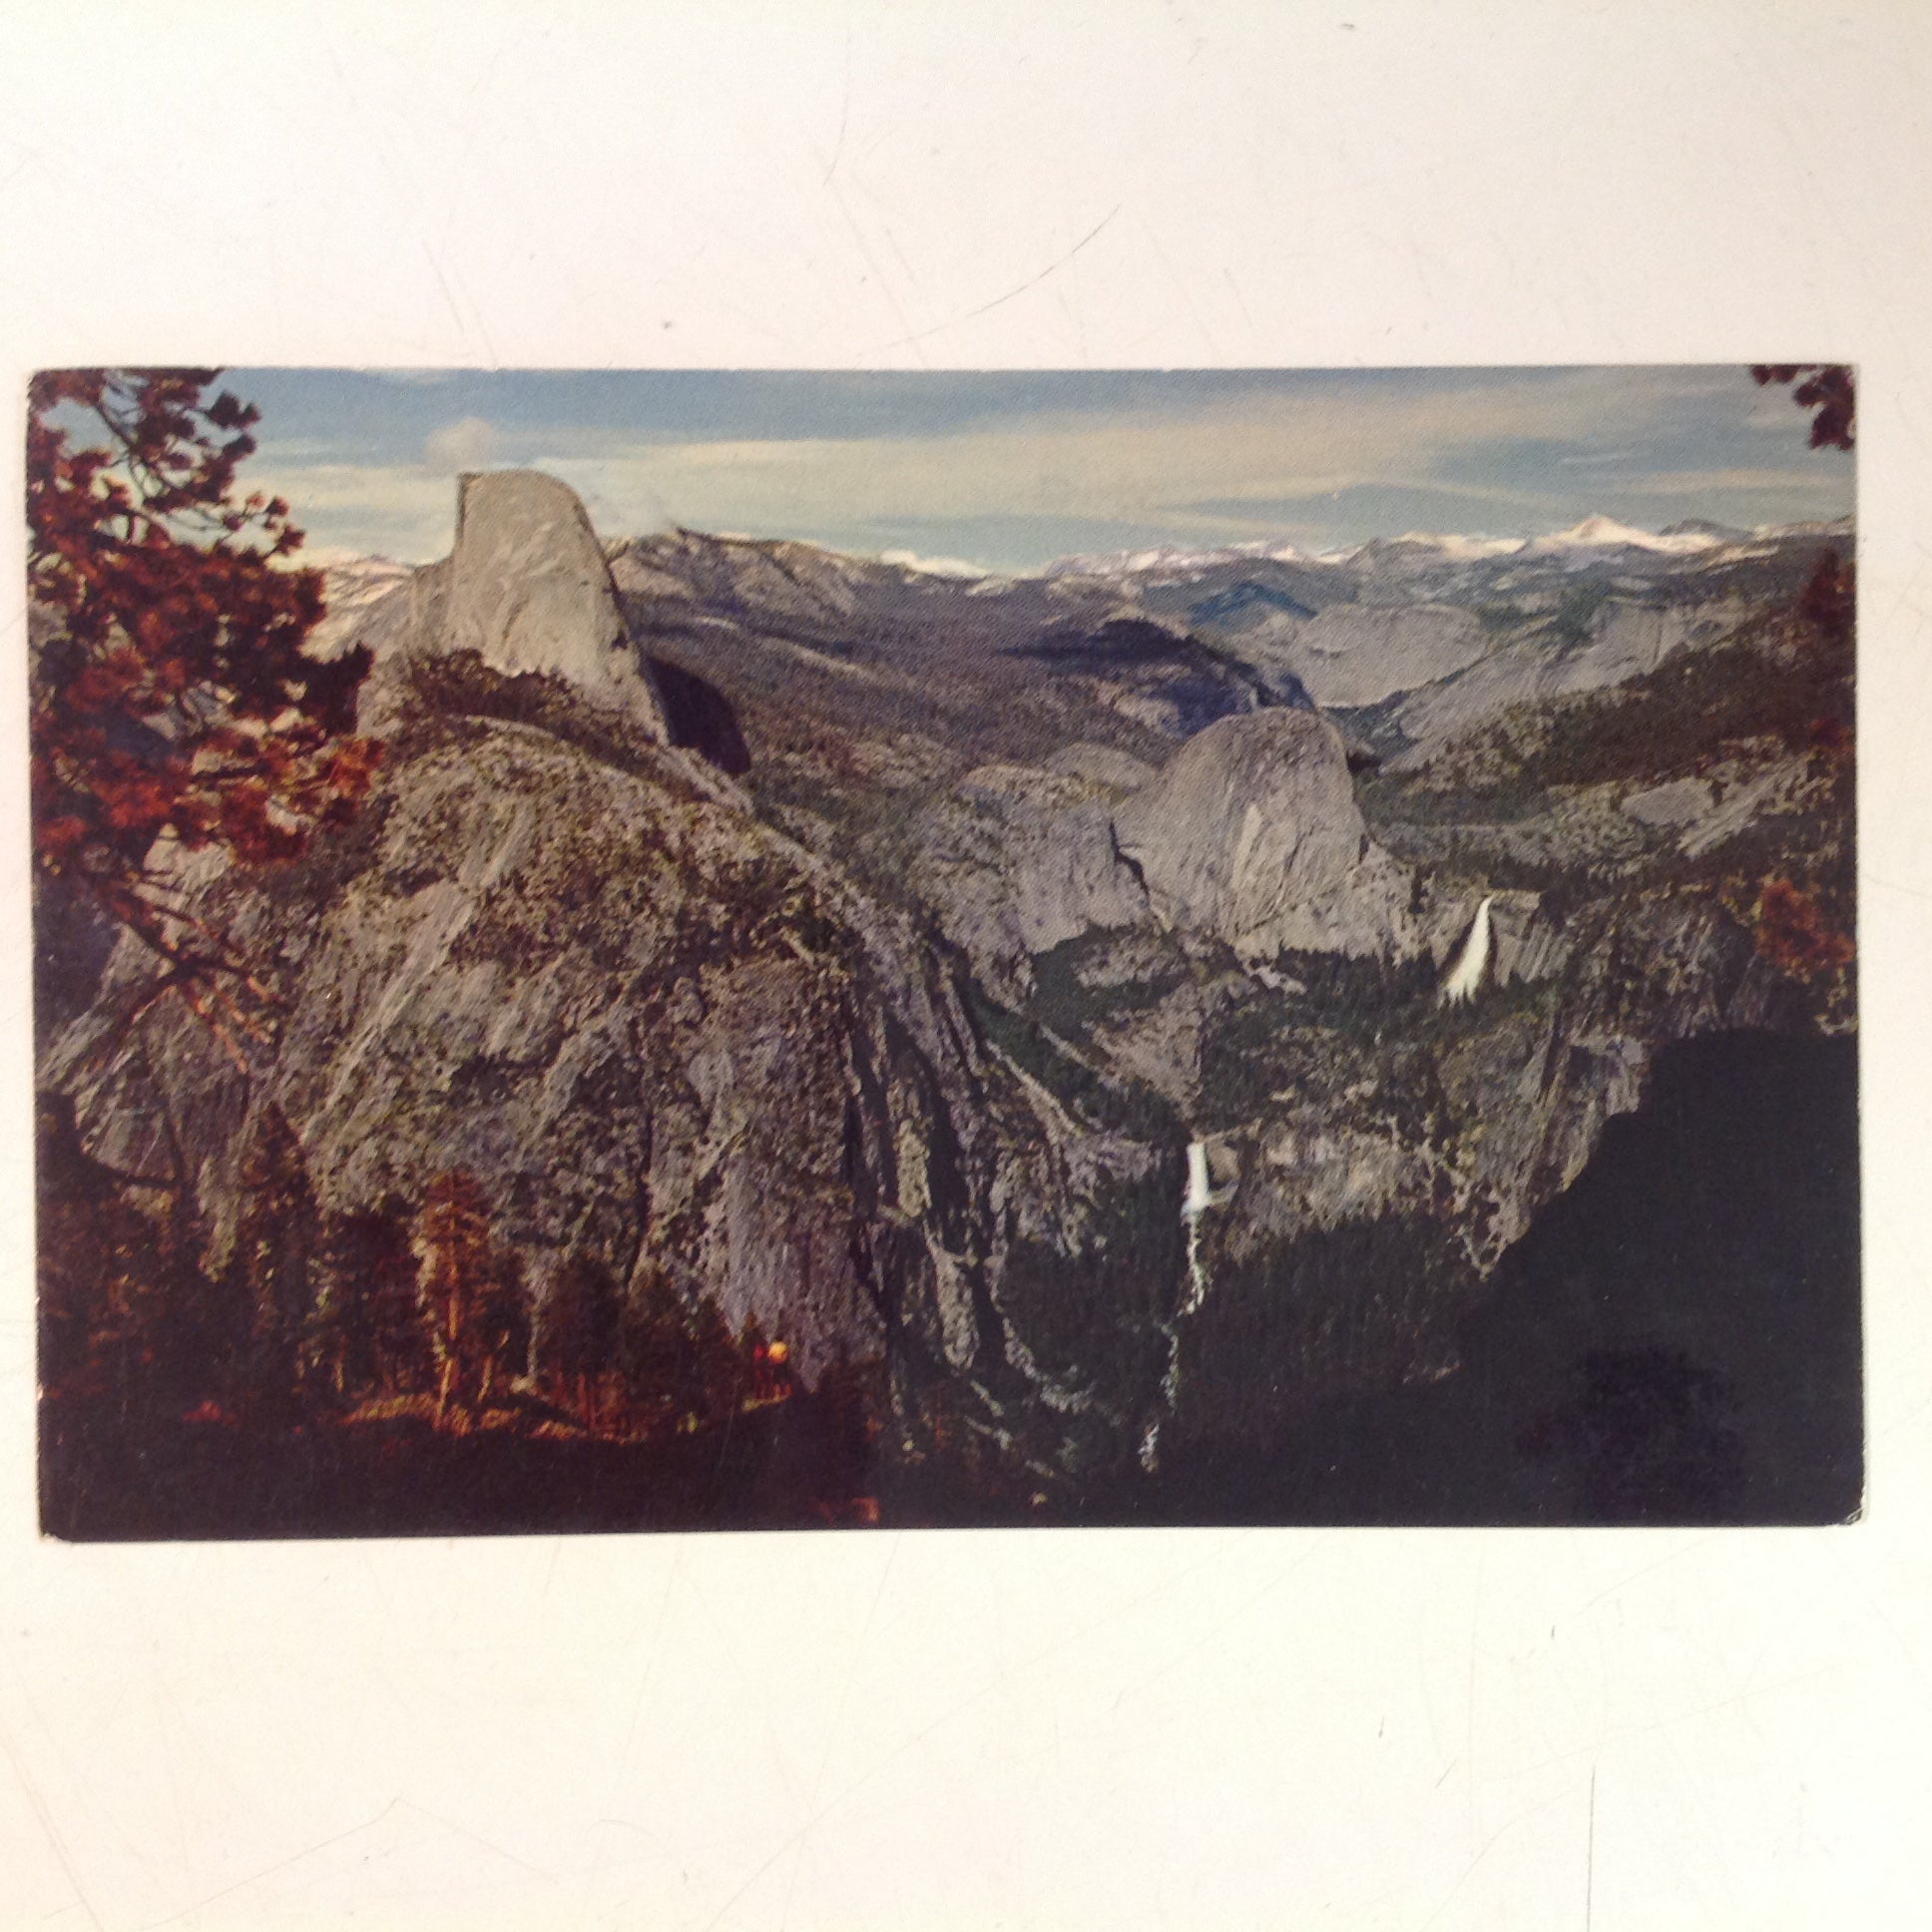 Vintage H S Crocker Mirro-Krome Souvenir Color Postcard High Sierra from Glacier Point Yosemite National Park California